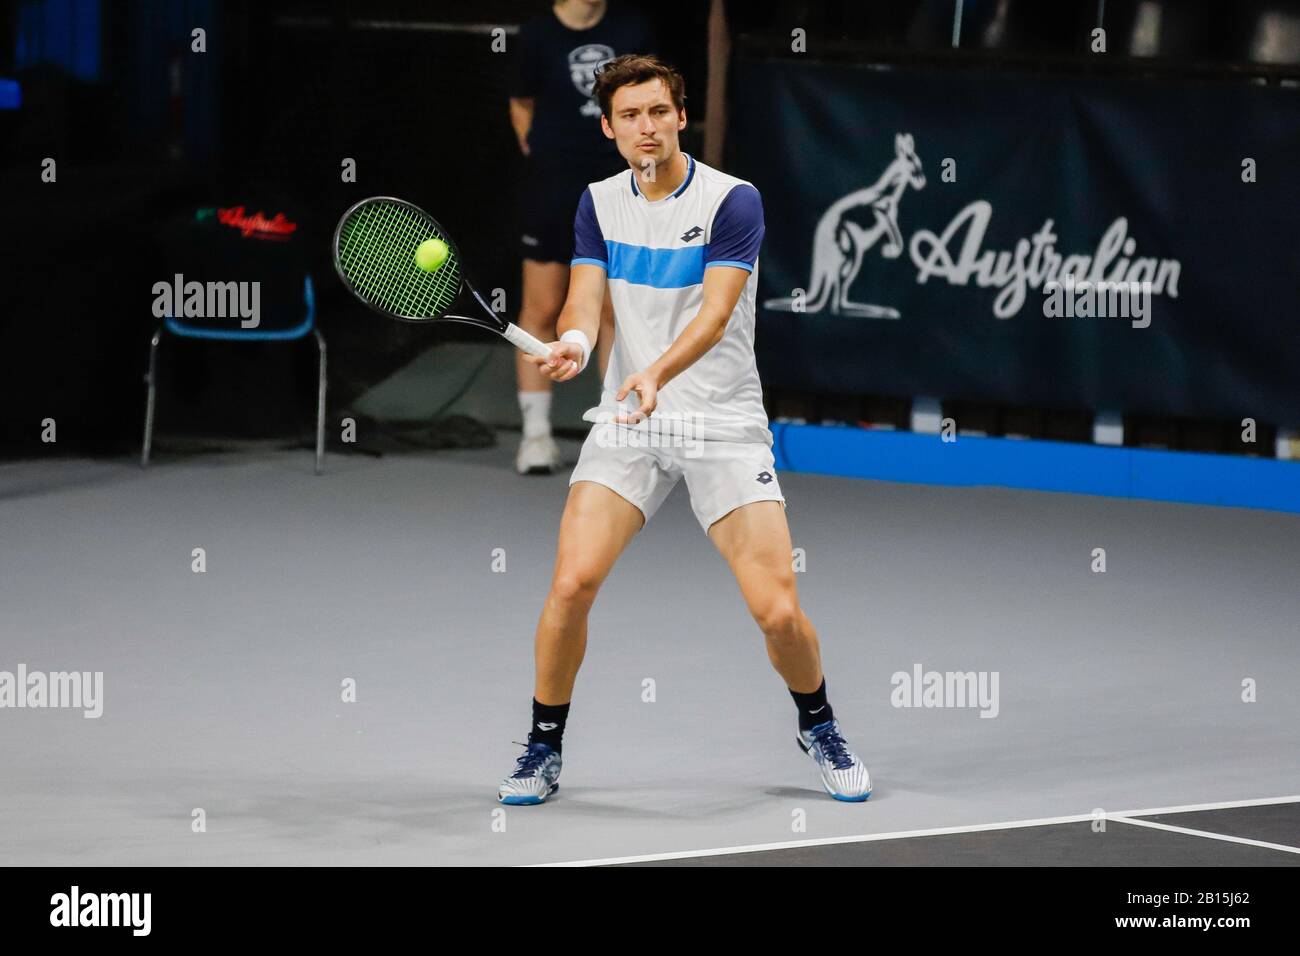 julian ocleppo during ATP Bergamo Challenger, Bergamo, Italy, 22 Feb 2020, Tennis  Tennis Internationals Stock Photo - Alamy